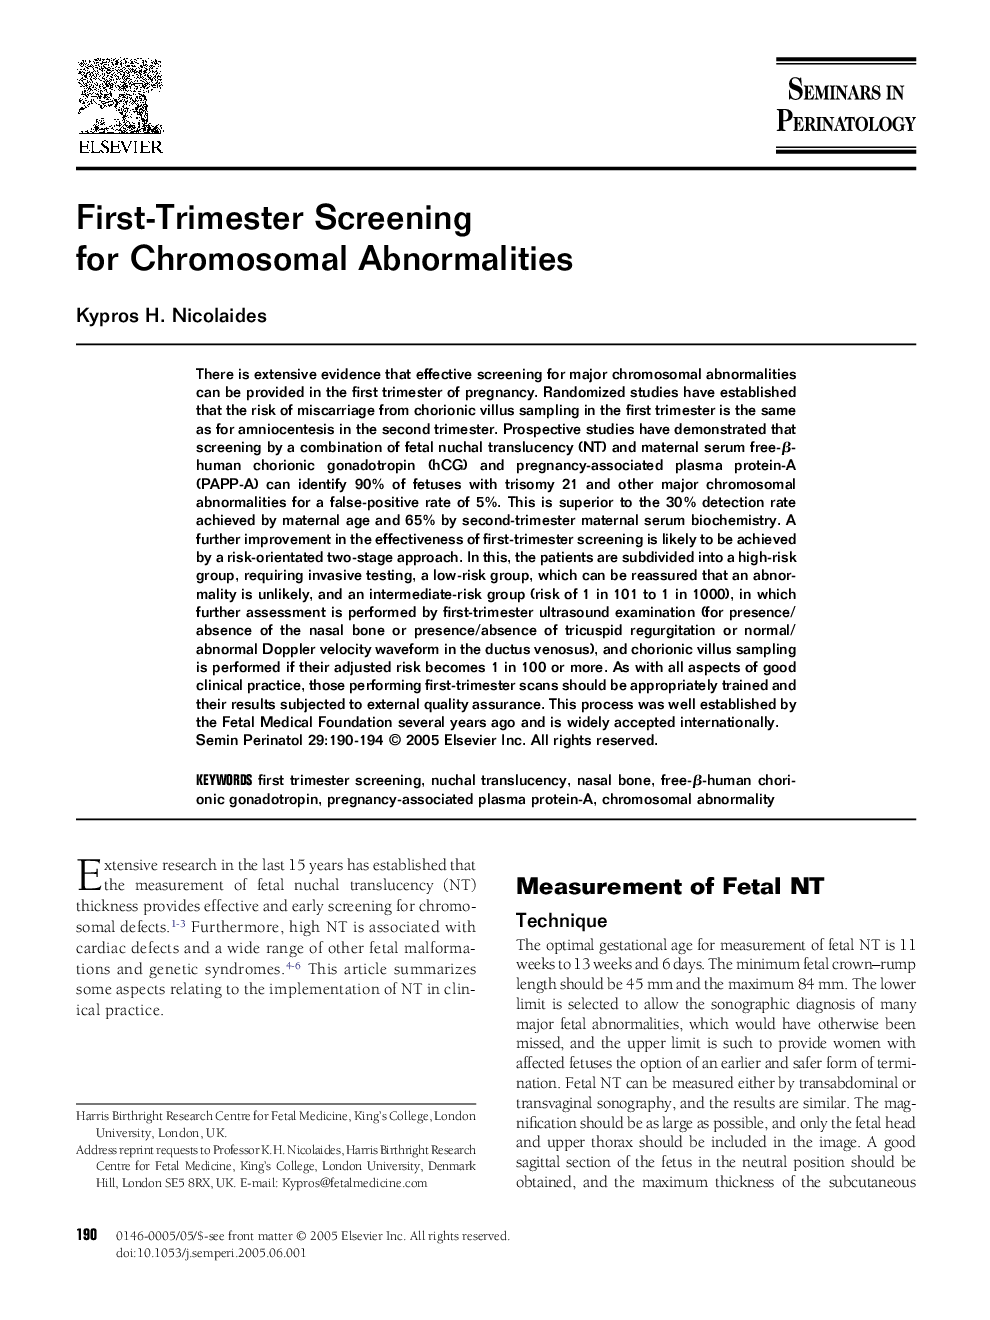 First-Trimester Screening for Chromosomal Abnormalities